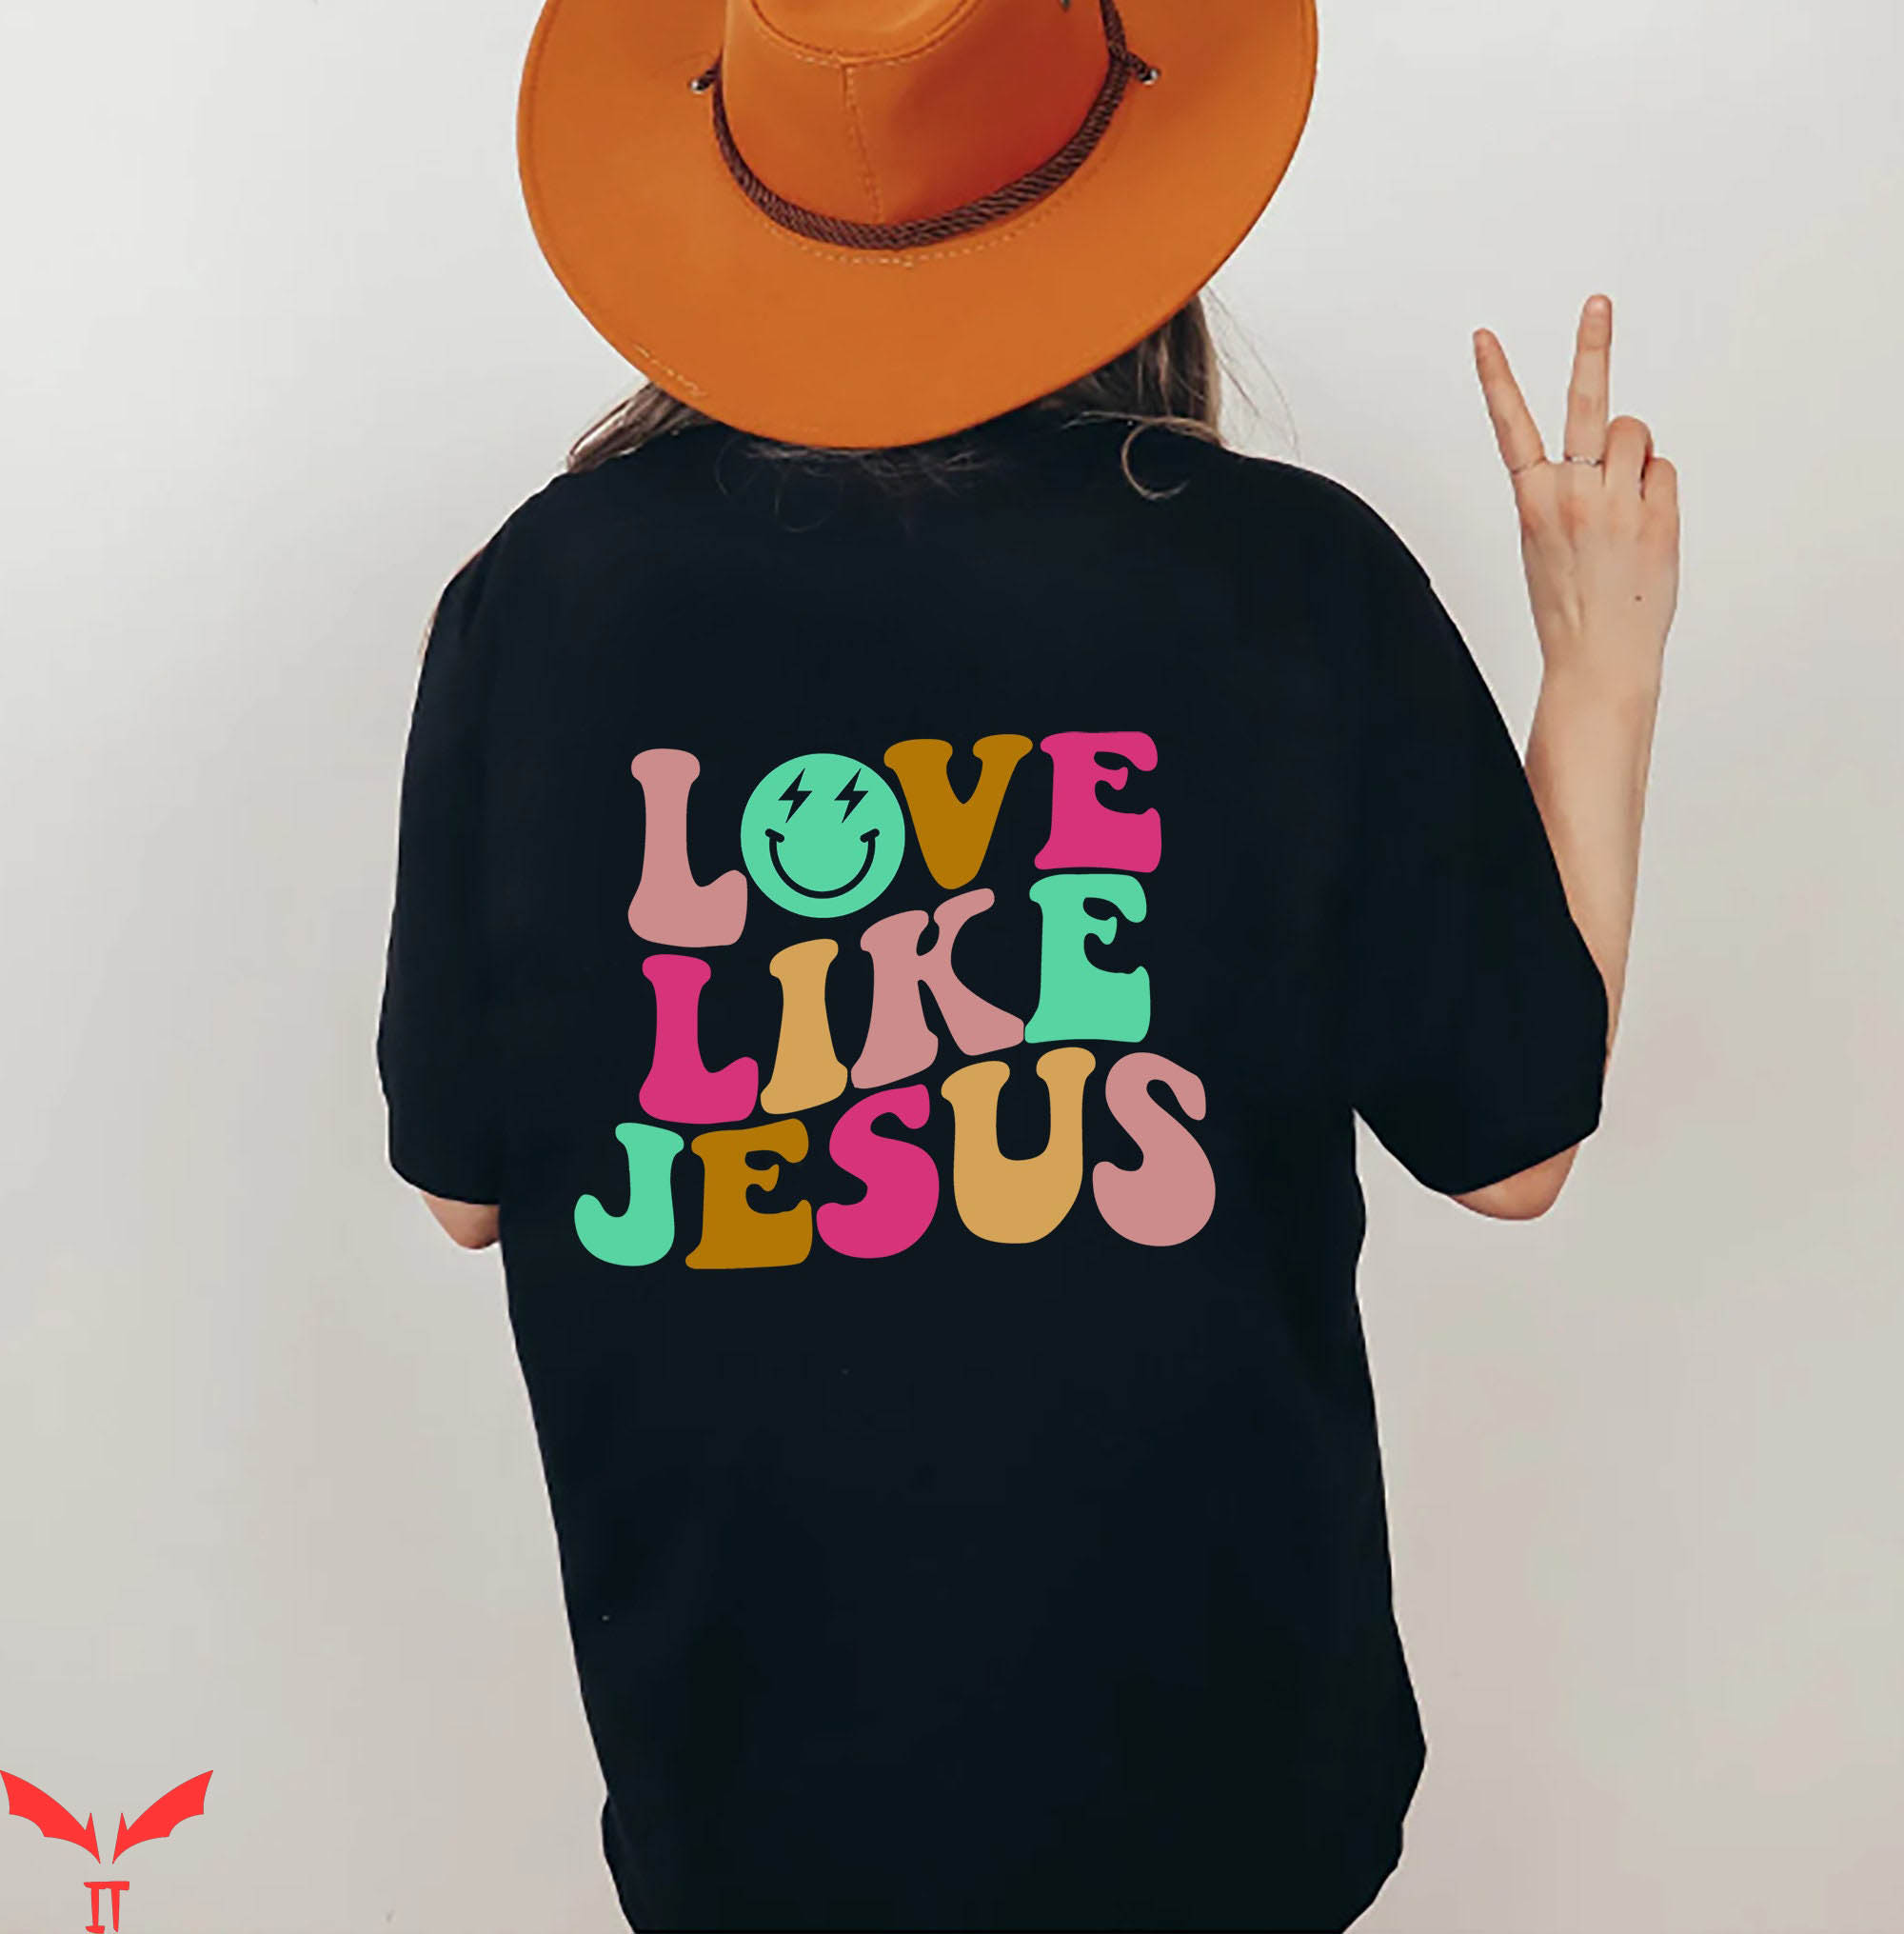 Love Like Jesus T-Shirt Trendy Retro Super Cute And Comfy